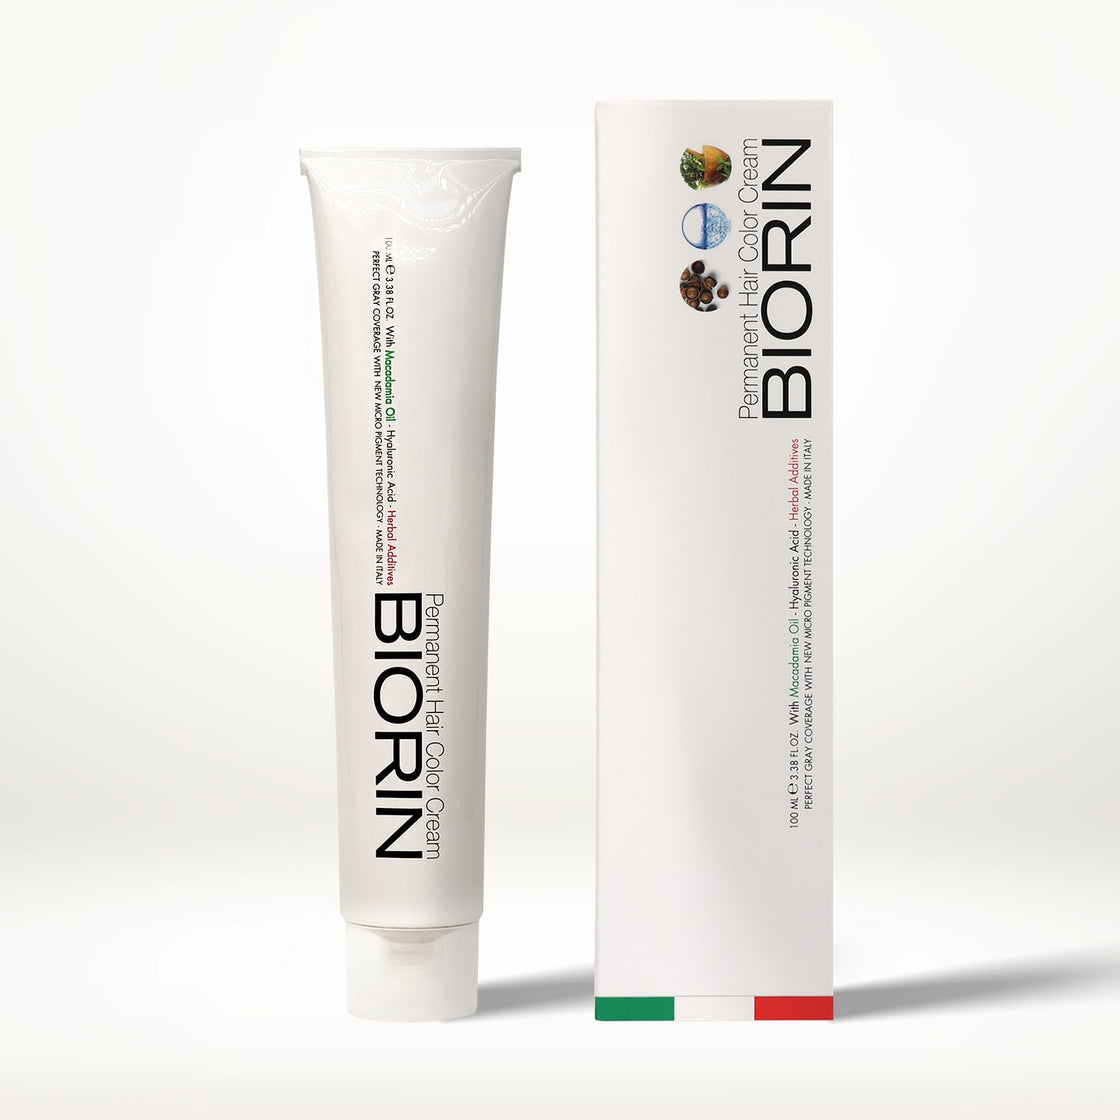 Biorin Haircolor - ULTIMATE COVER 100ml